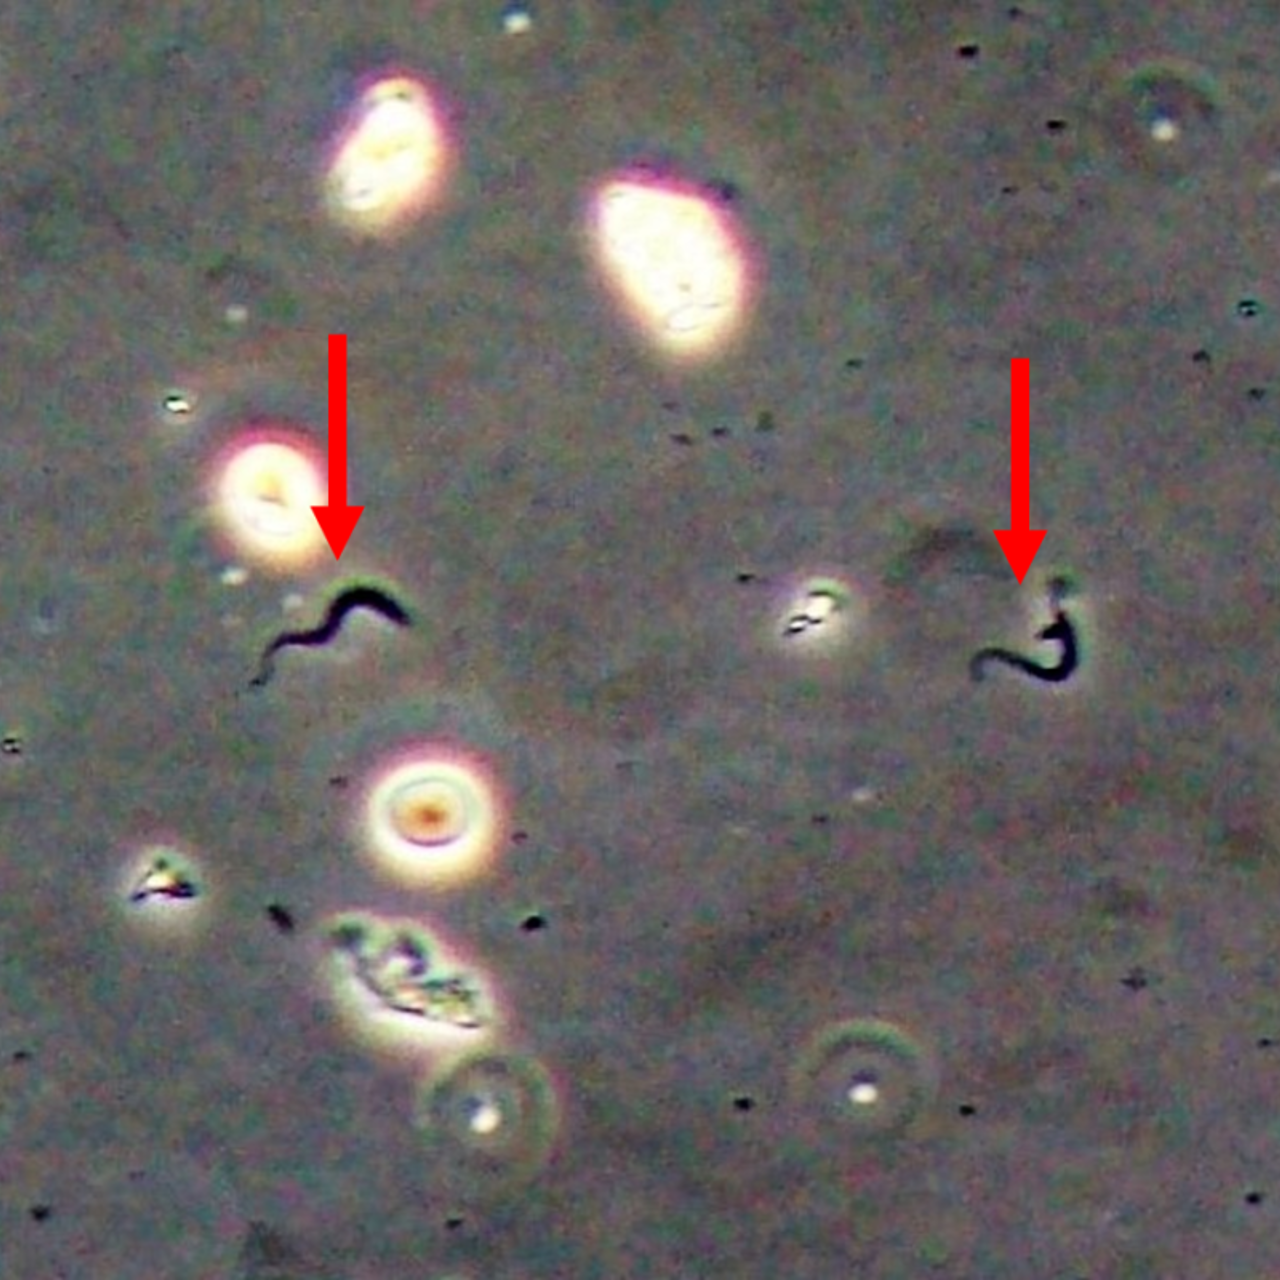 Trypanosoma cruzi trypomastigotes in the urine sediment imaged with phase contrast microscopy.